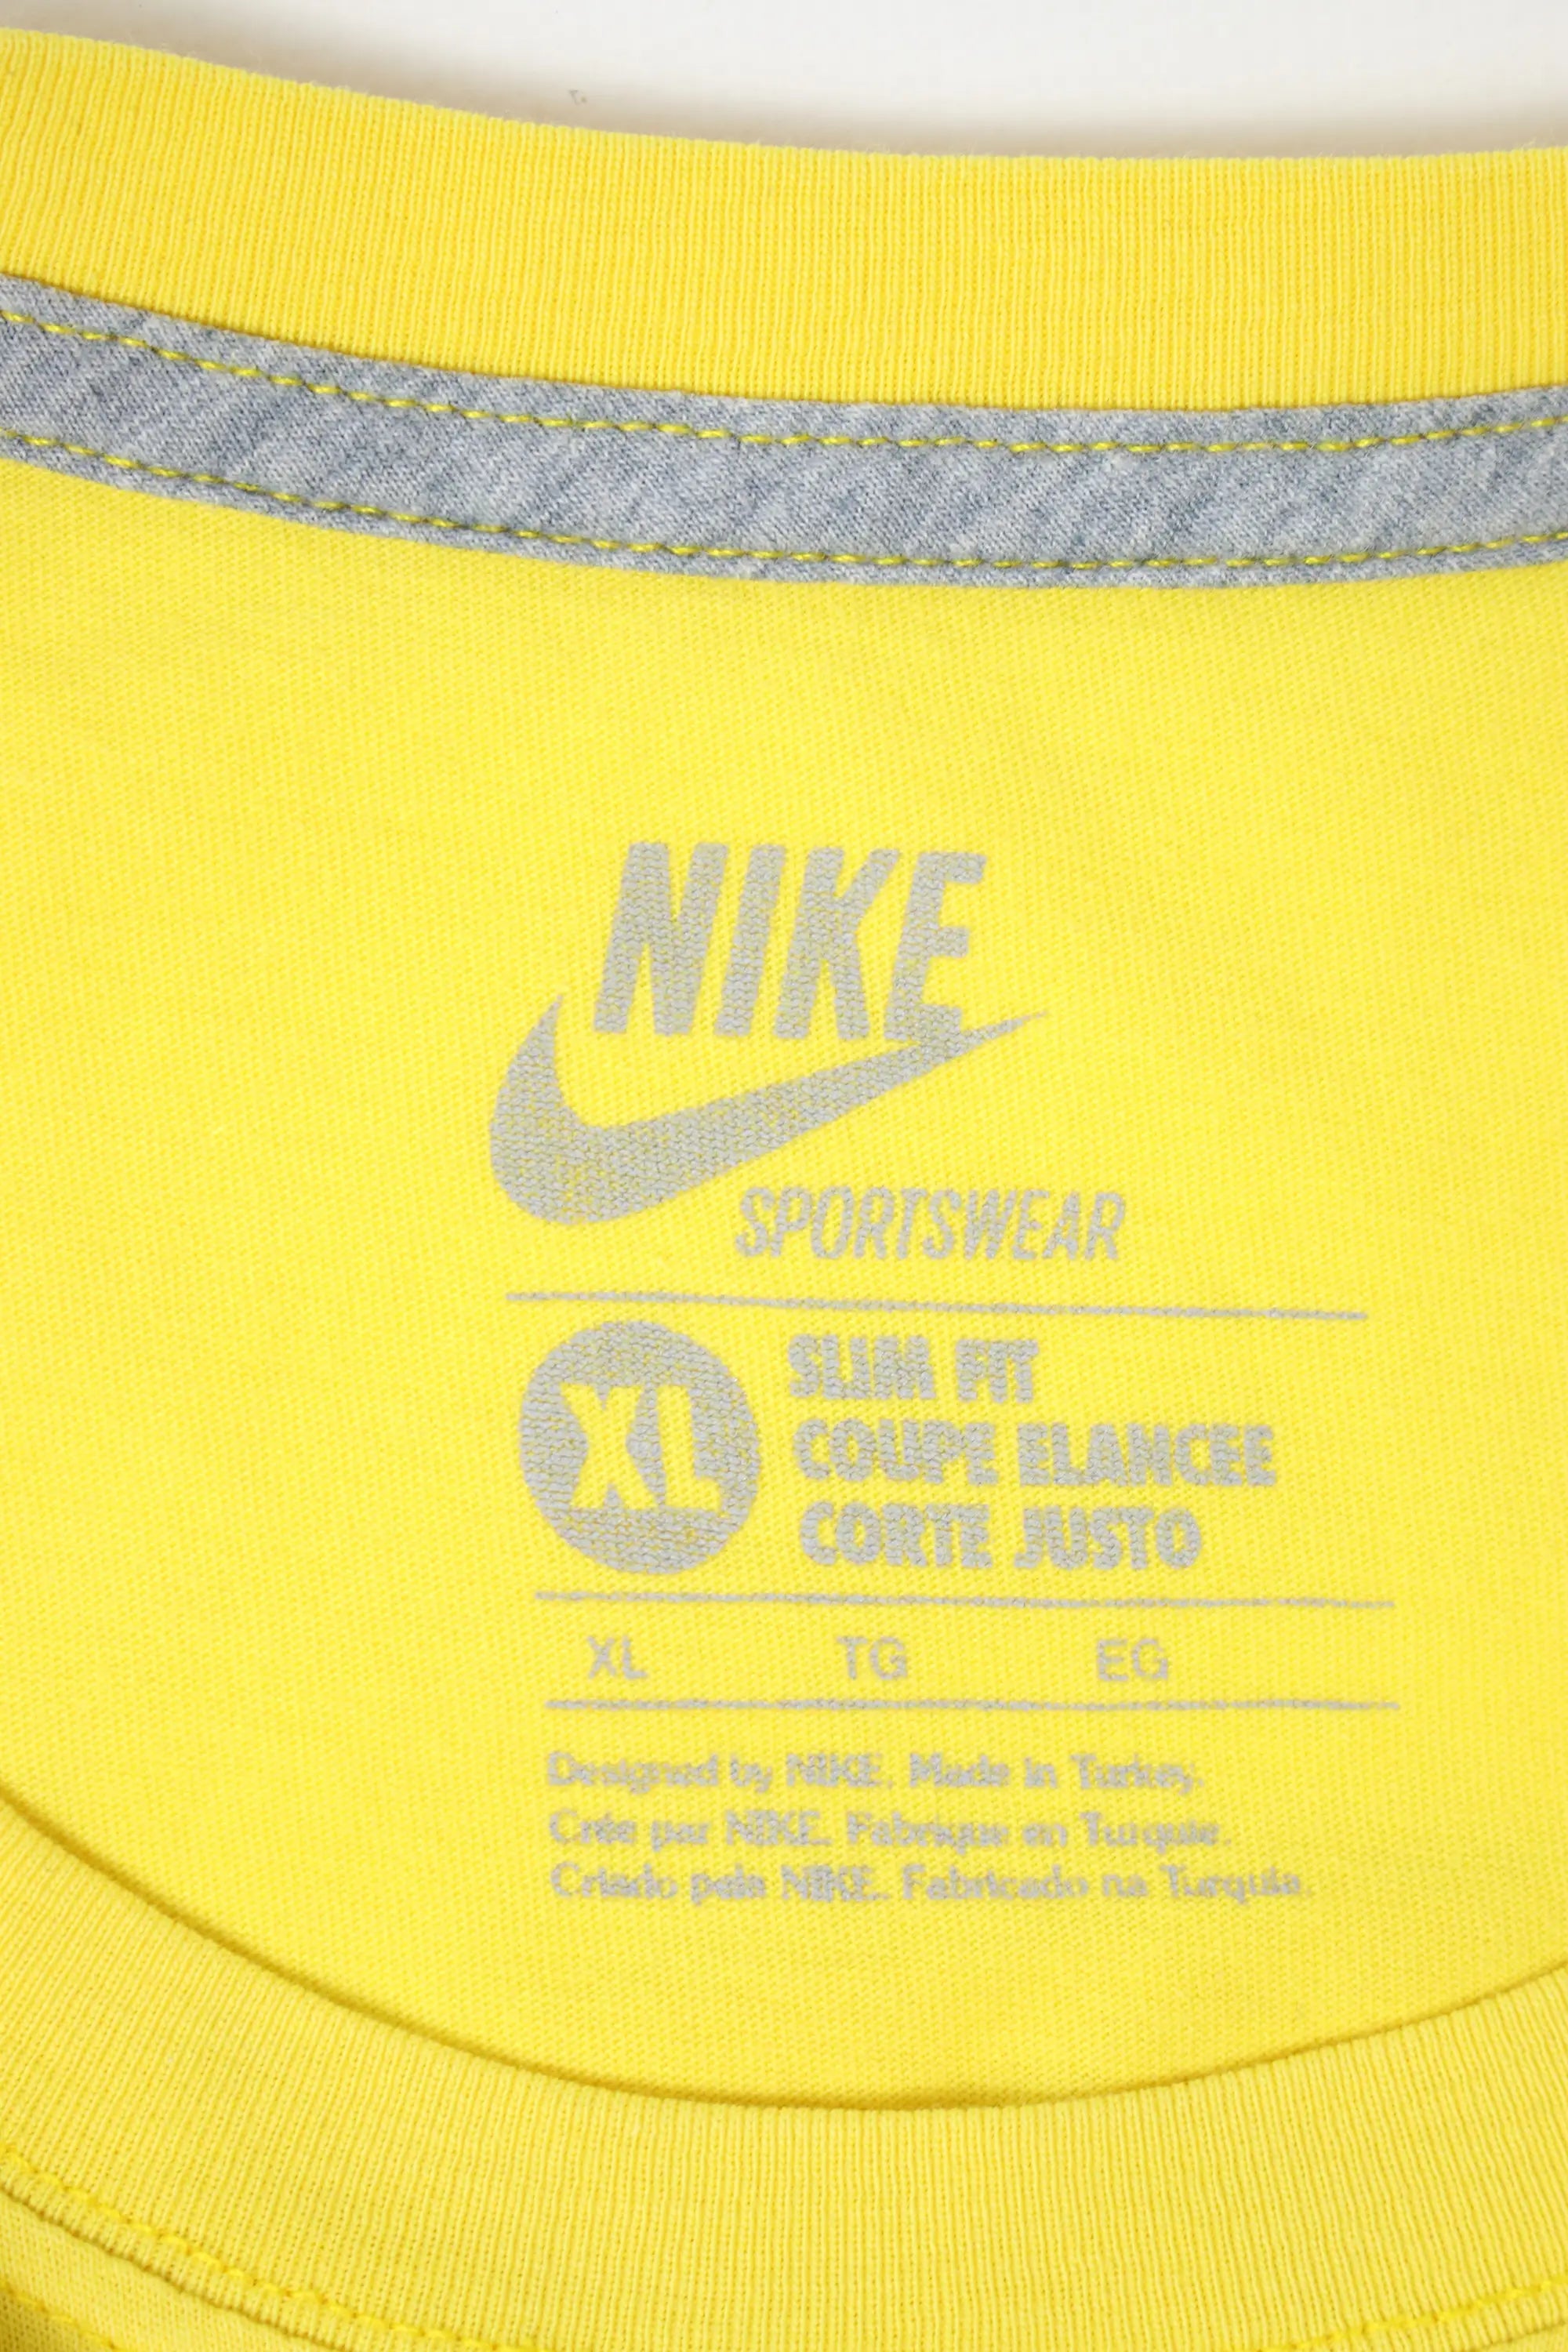 Nike Dunk T.